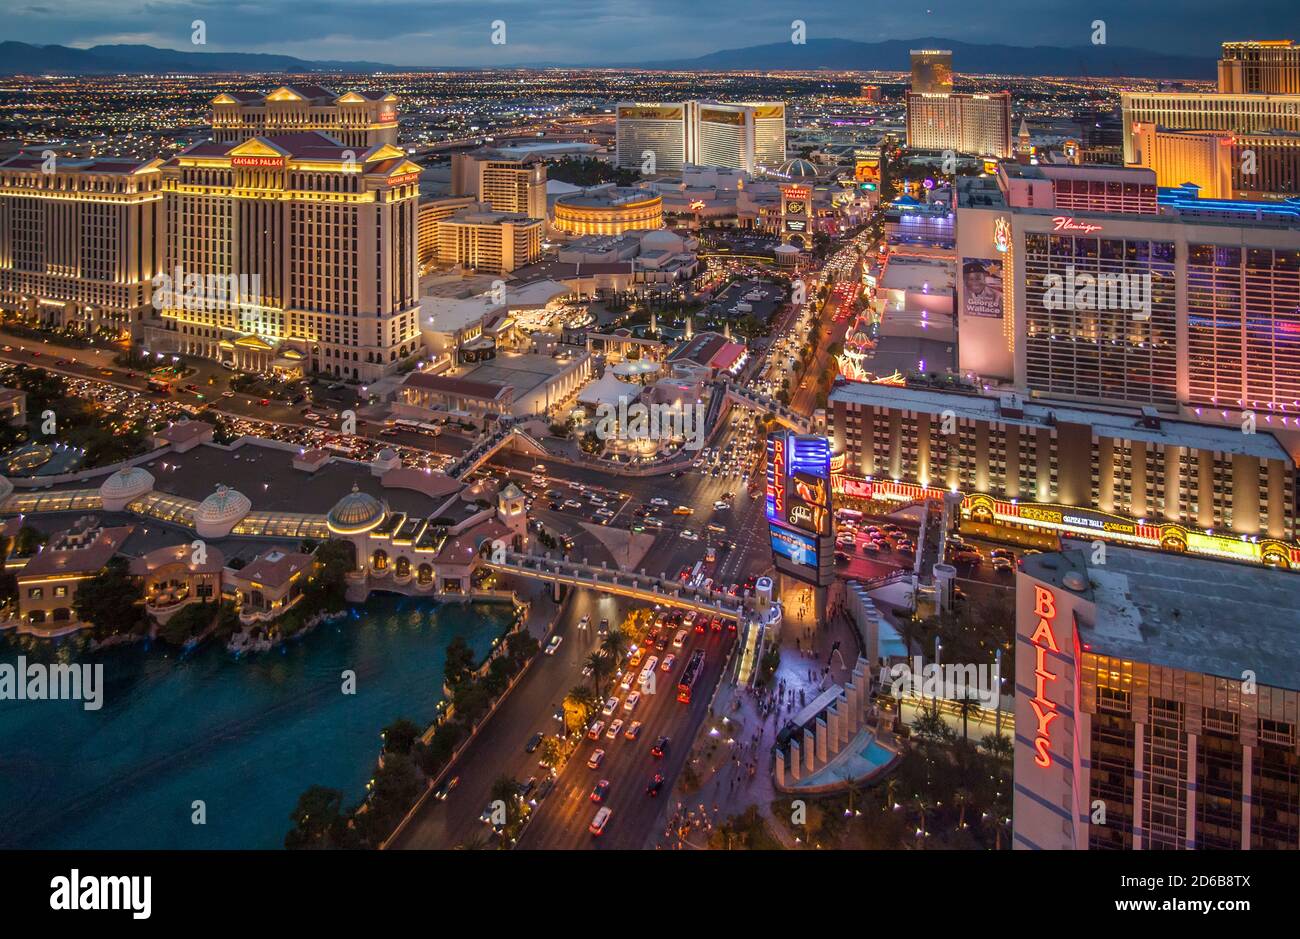 Am Strip, Las Vegas bei Nacht Stockfoto